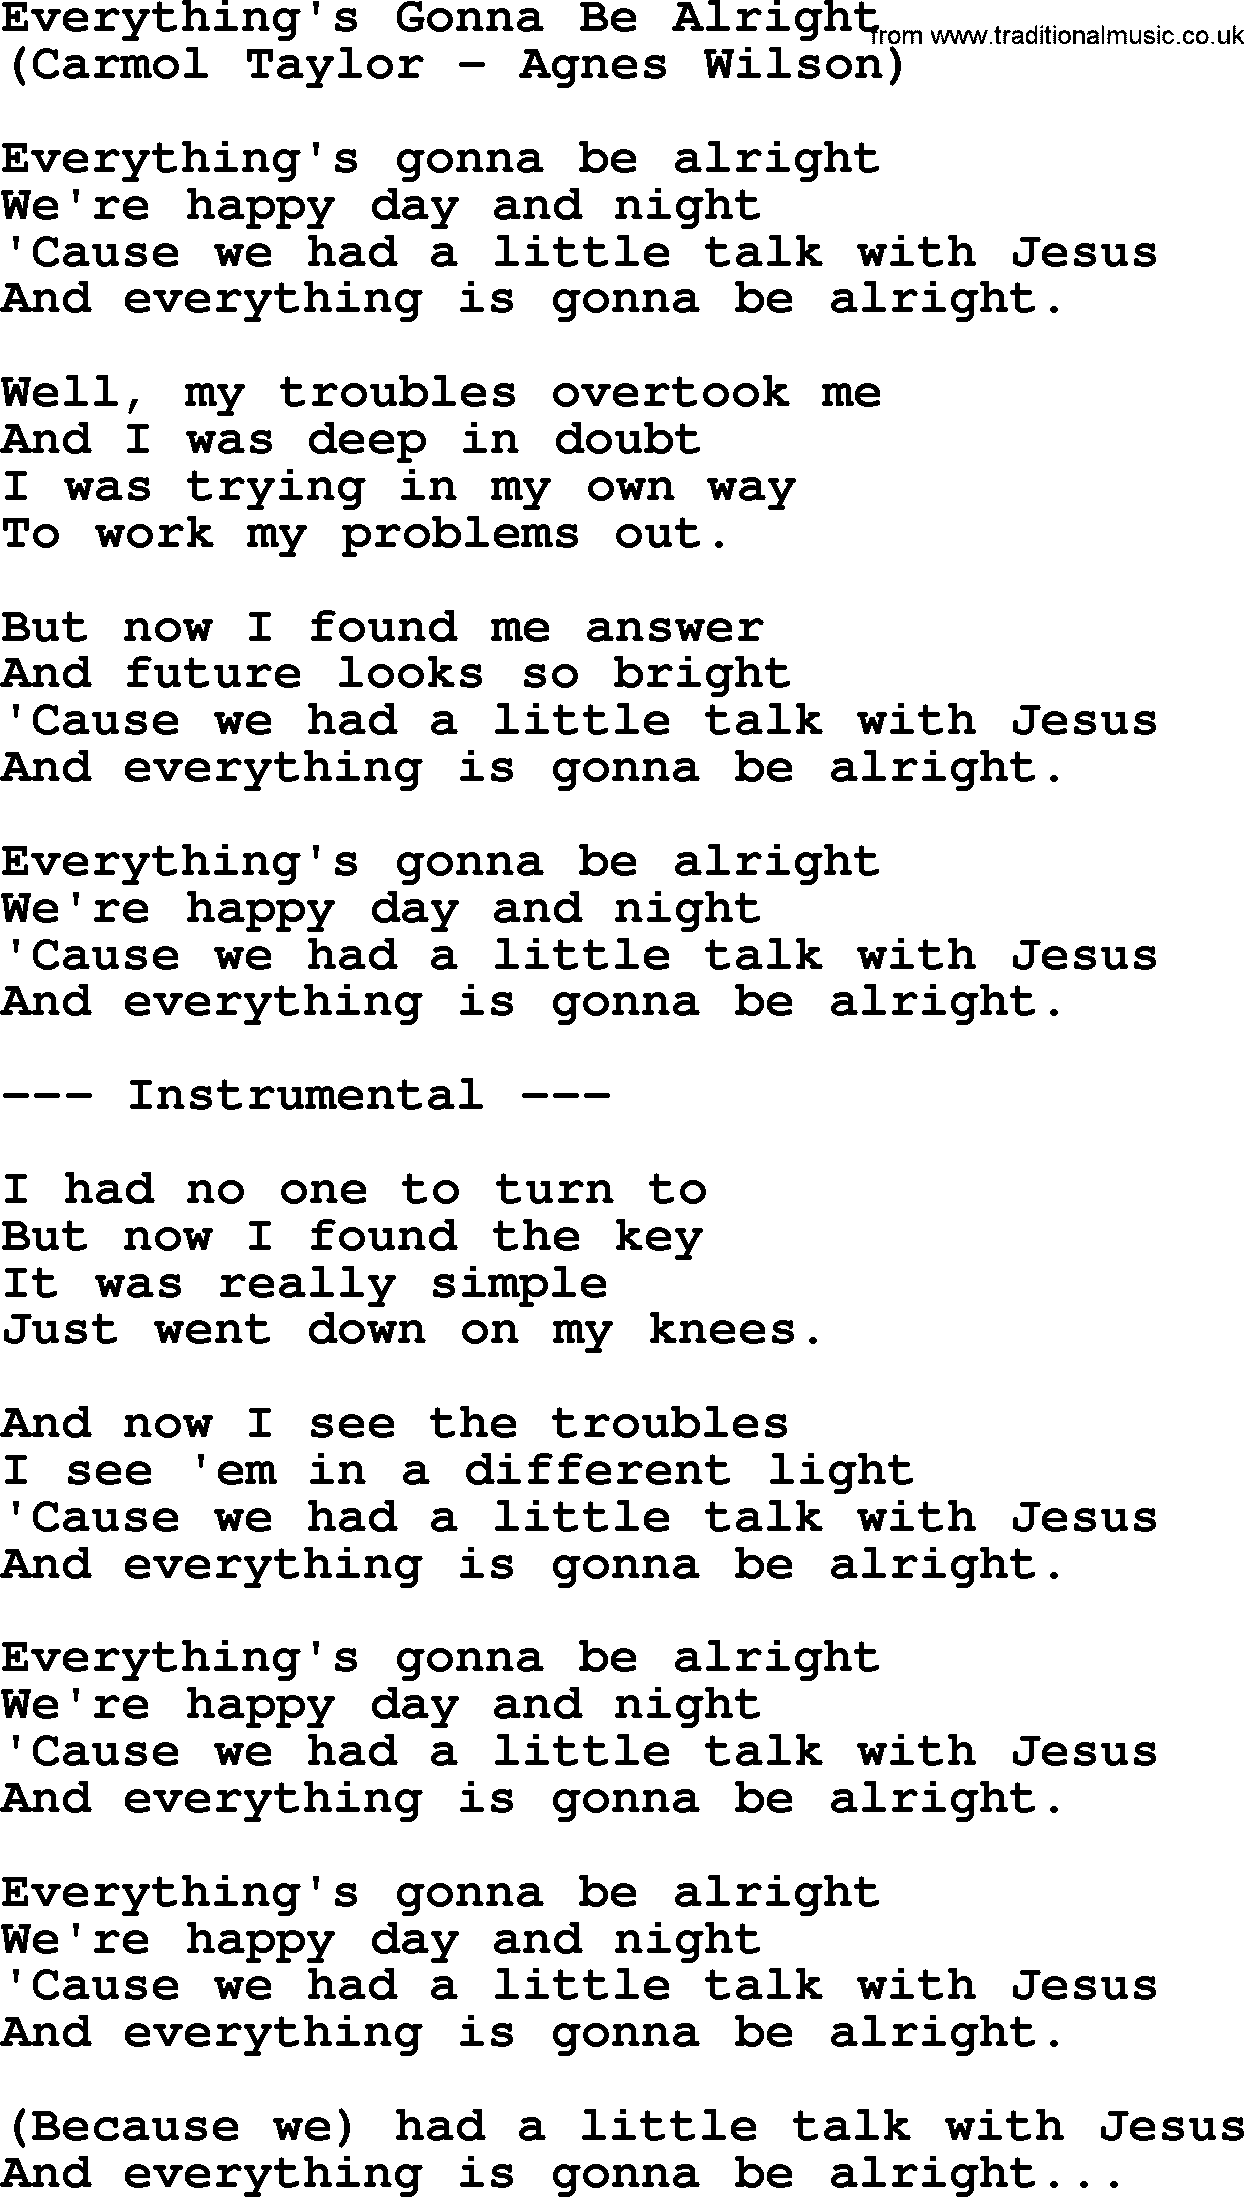 George Jones song: Everything's Gonna Be Alright, lyrics